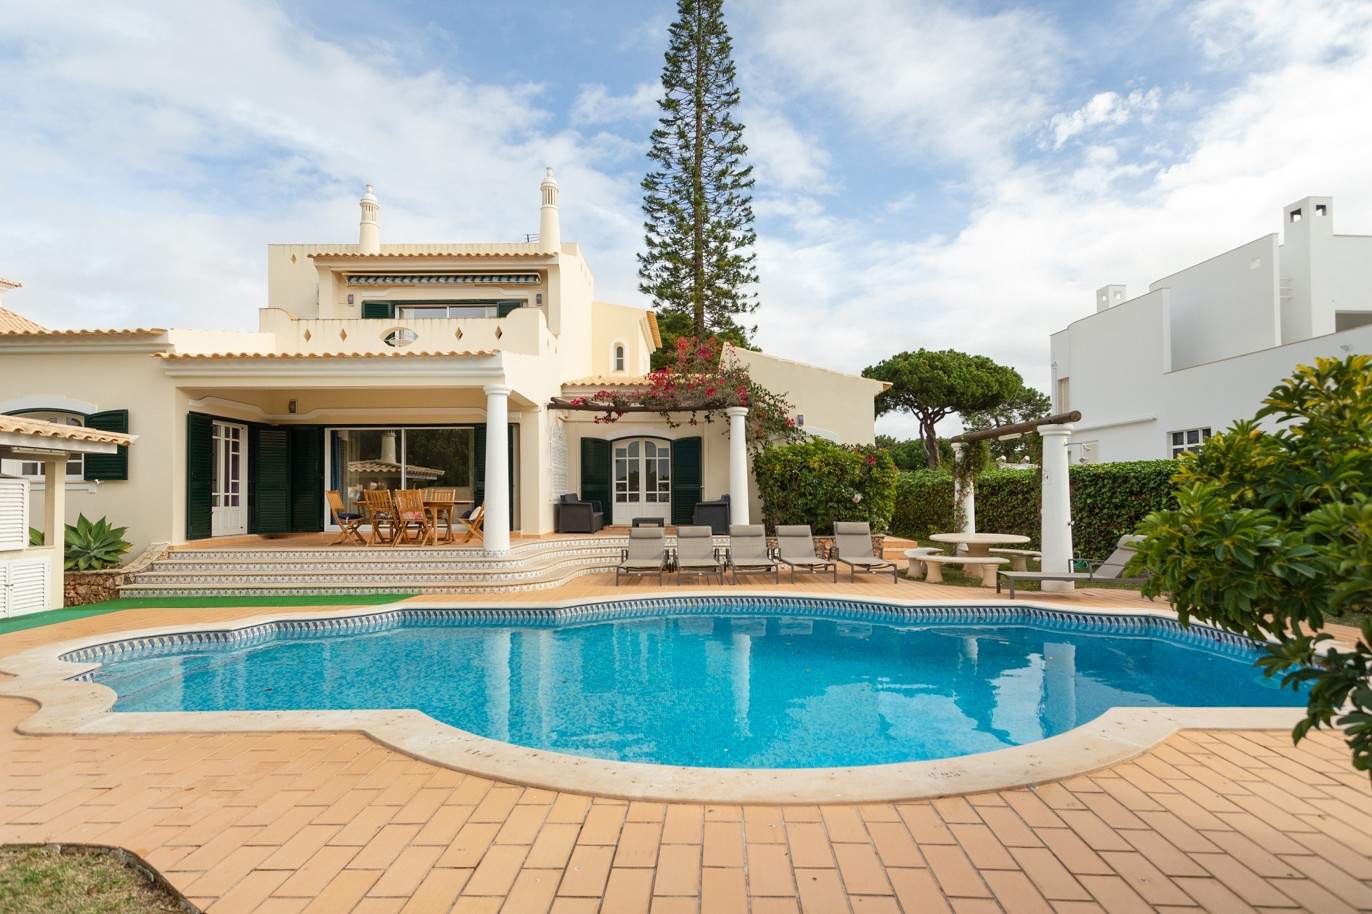 Moradia V5 com piscina, para venda em Vilamoura, Algarve_212569